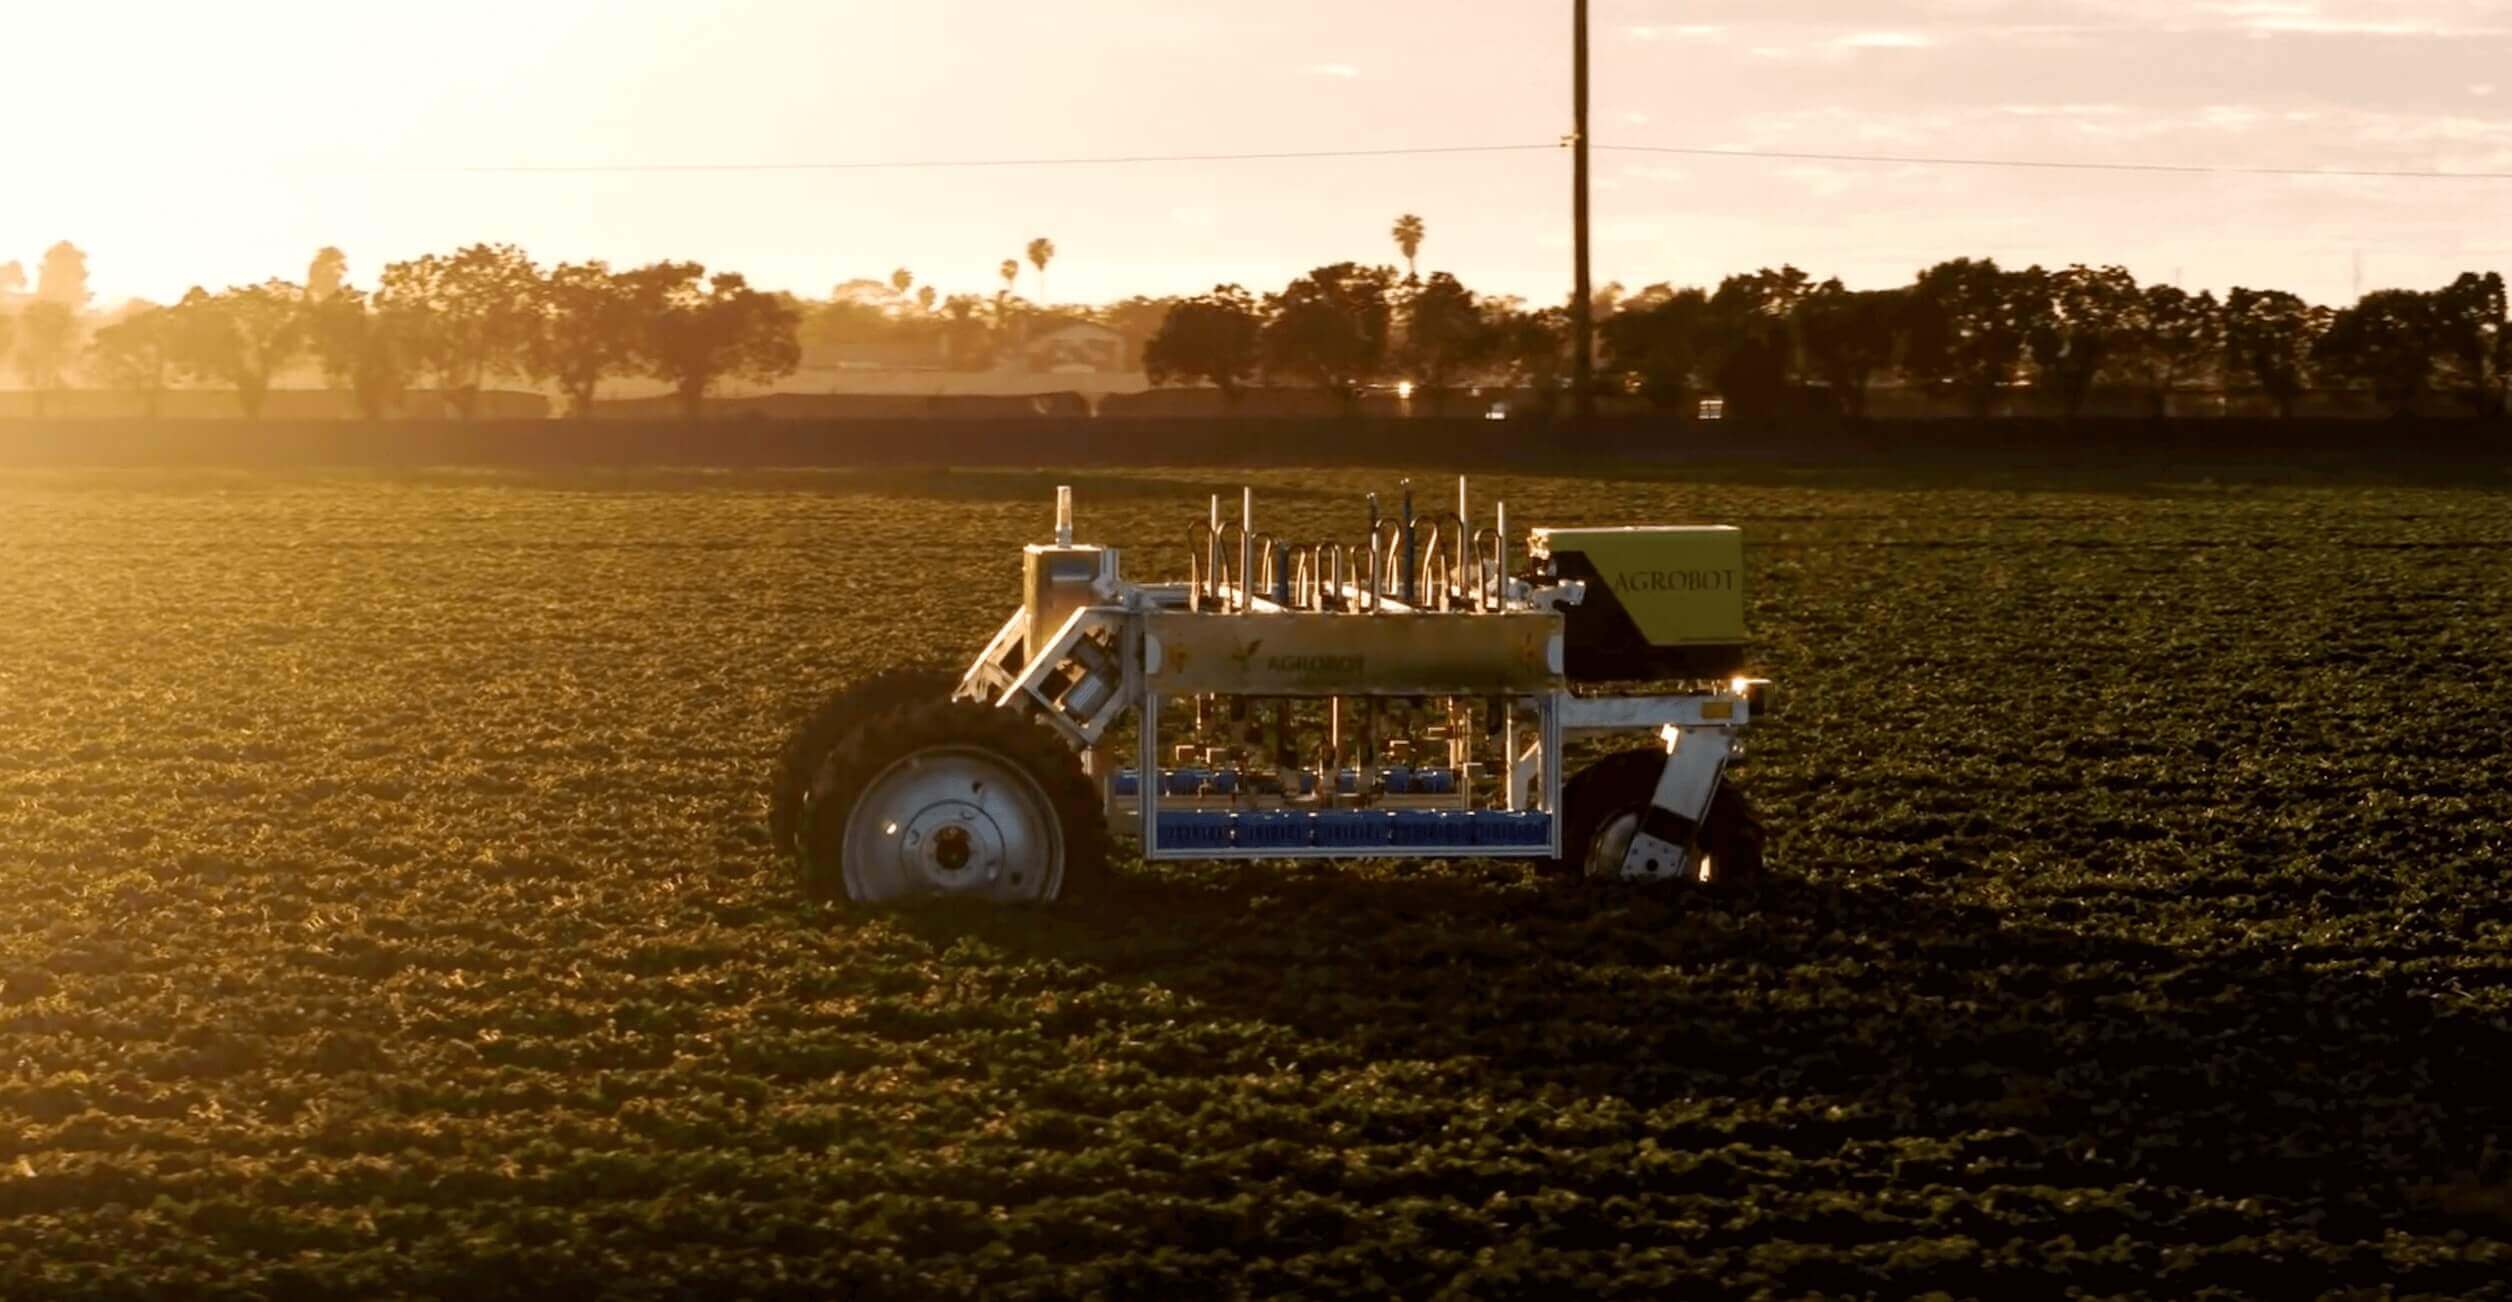 cosechadora robótica en un campo de fresas, automatización del campo